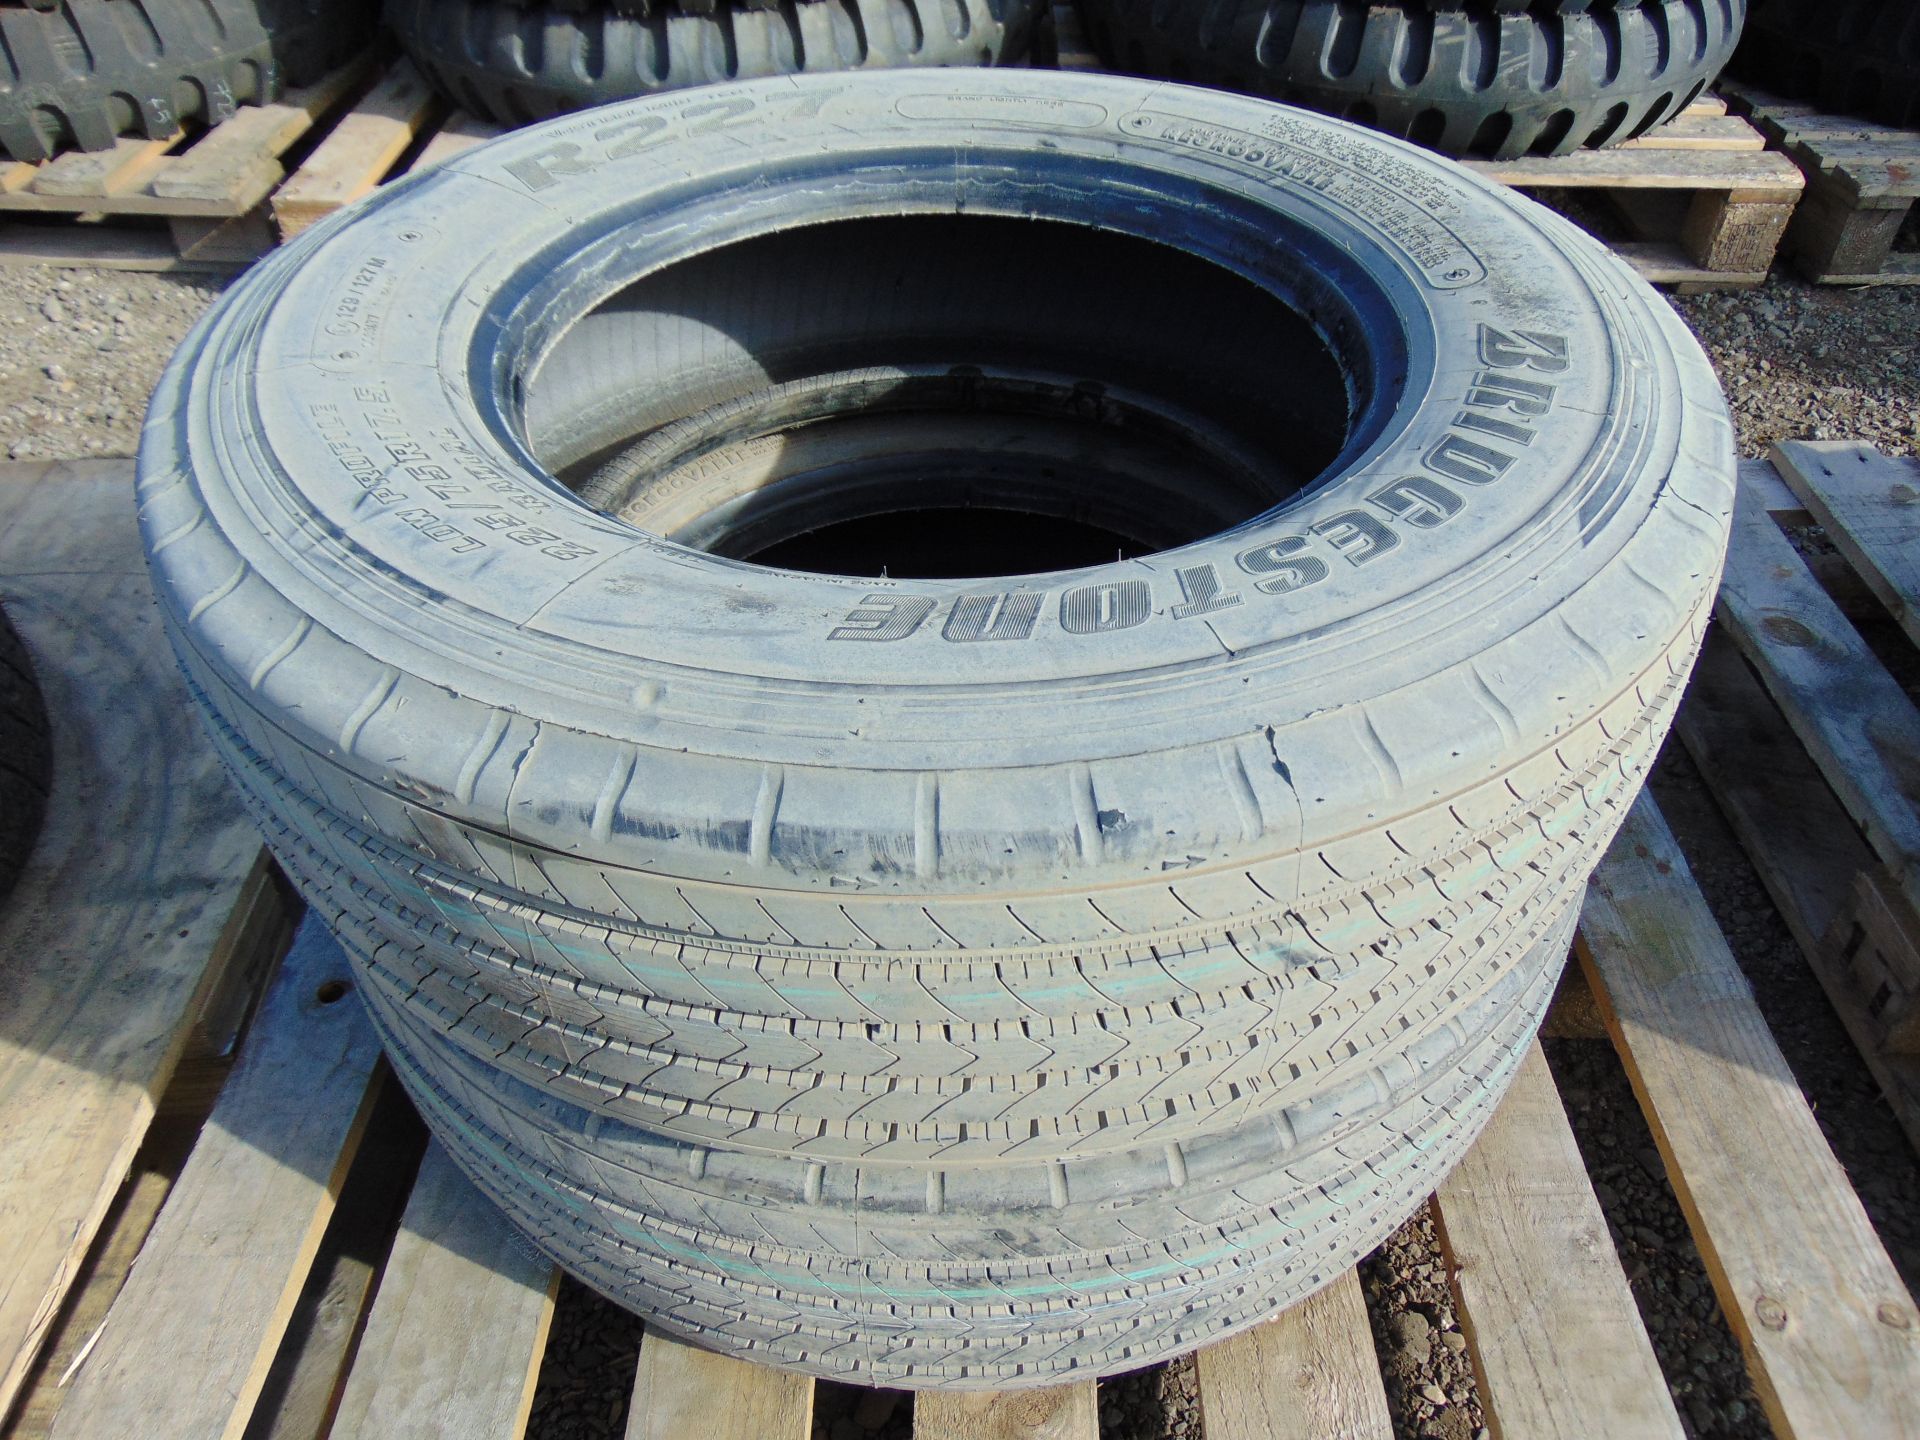 2 x Bridgestone R227 225/75 R17.5 Tyres